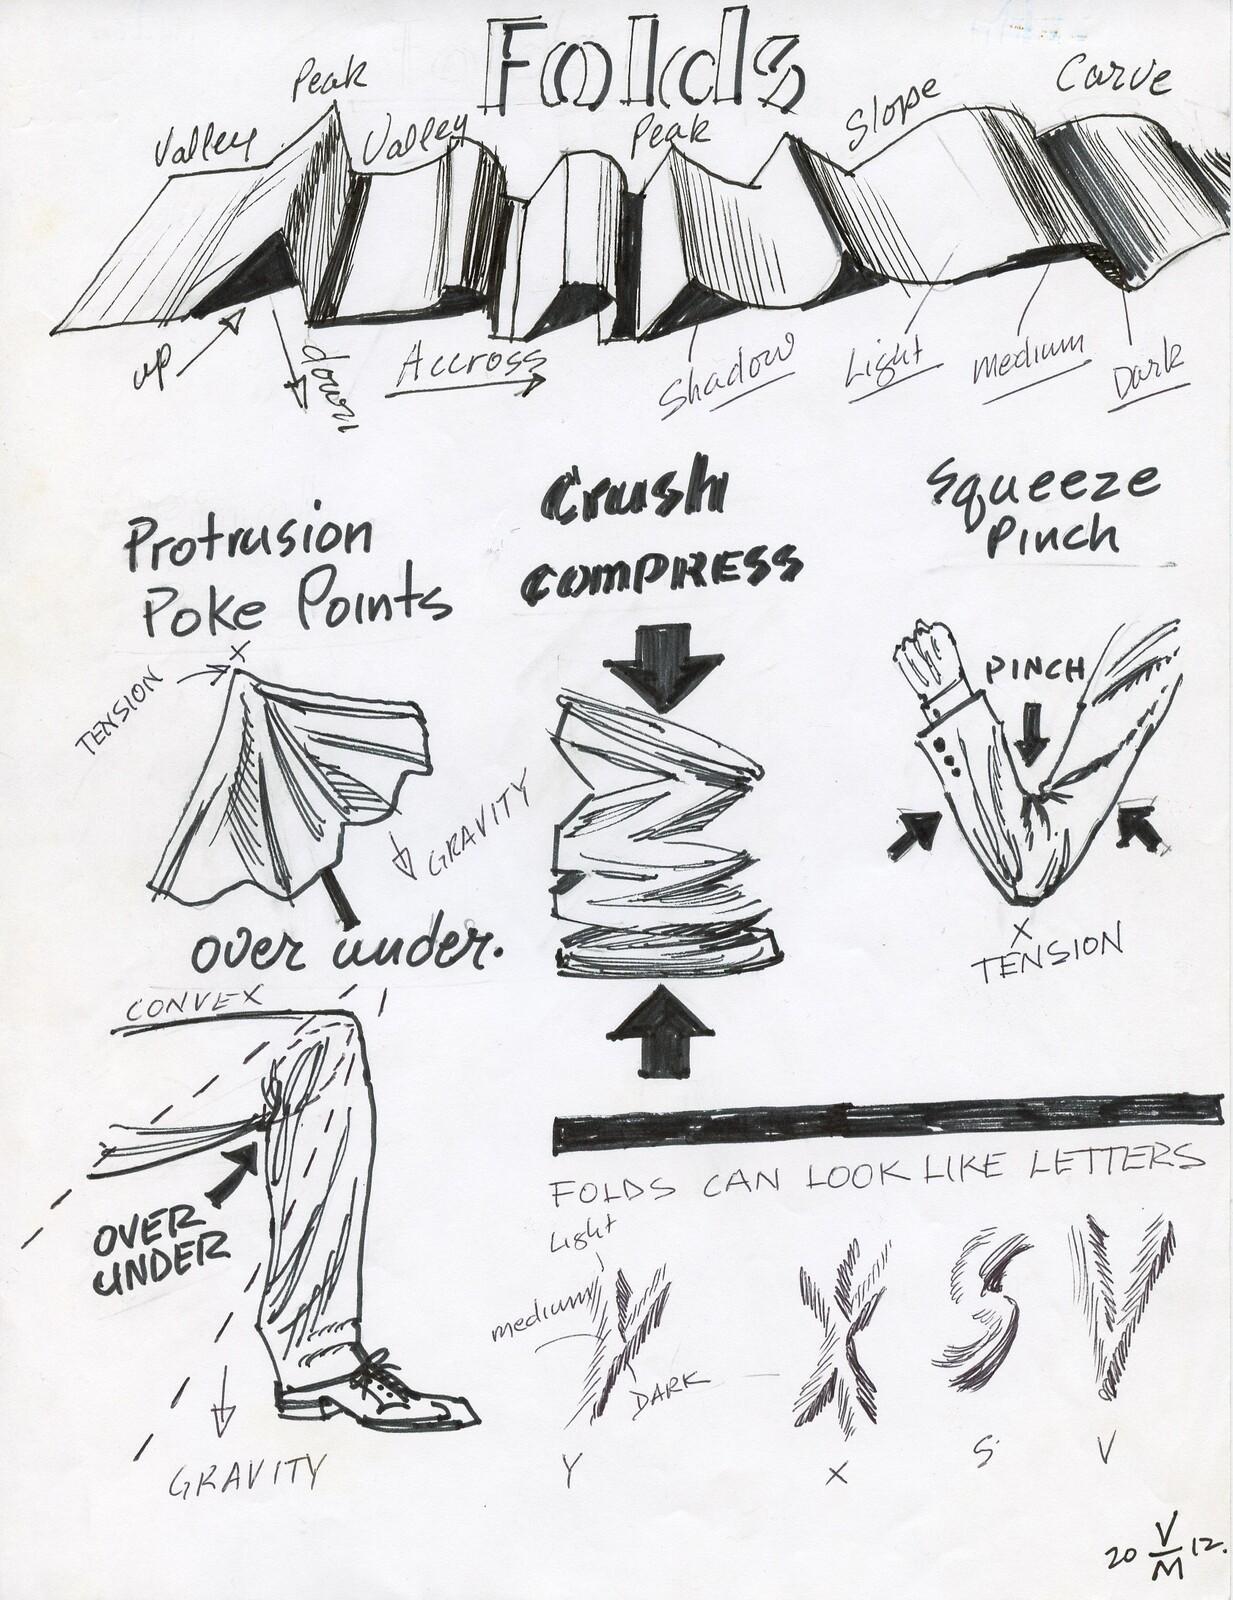 The anatomy of folds.